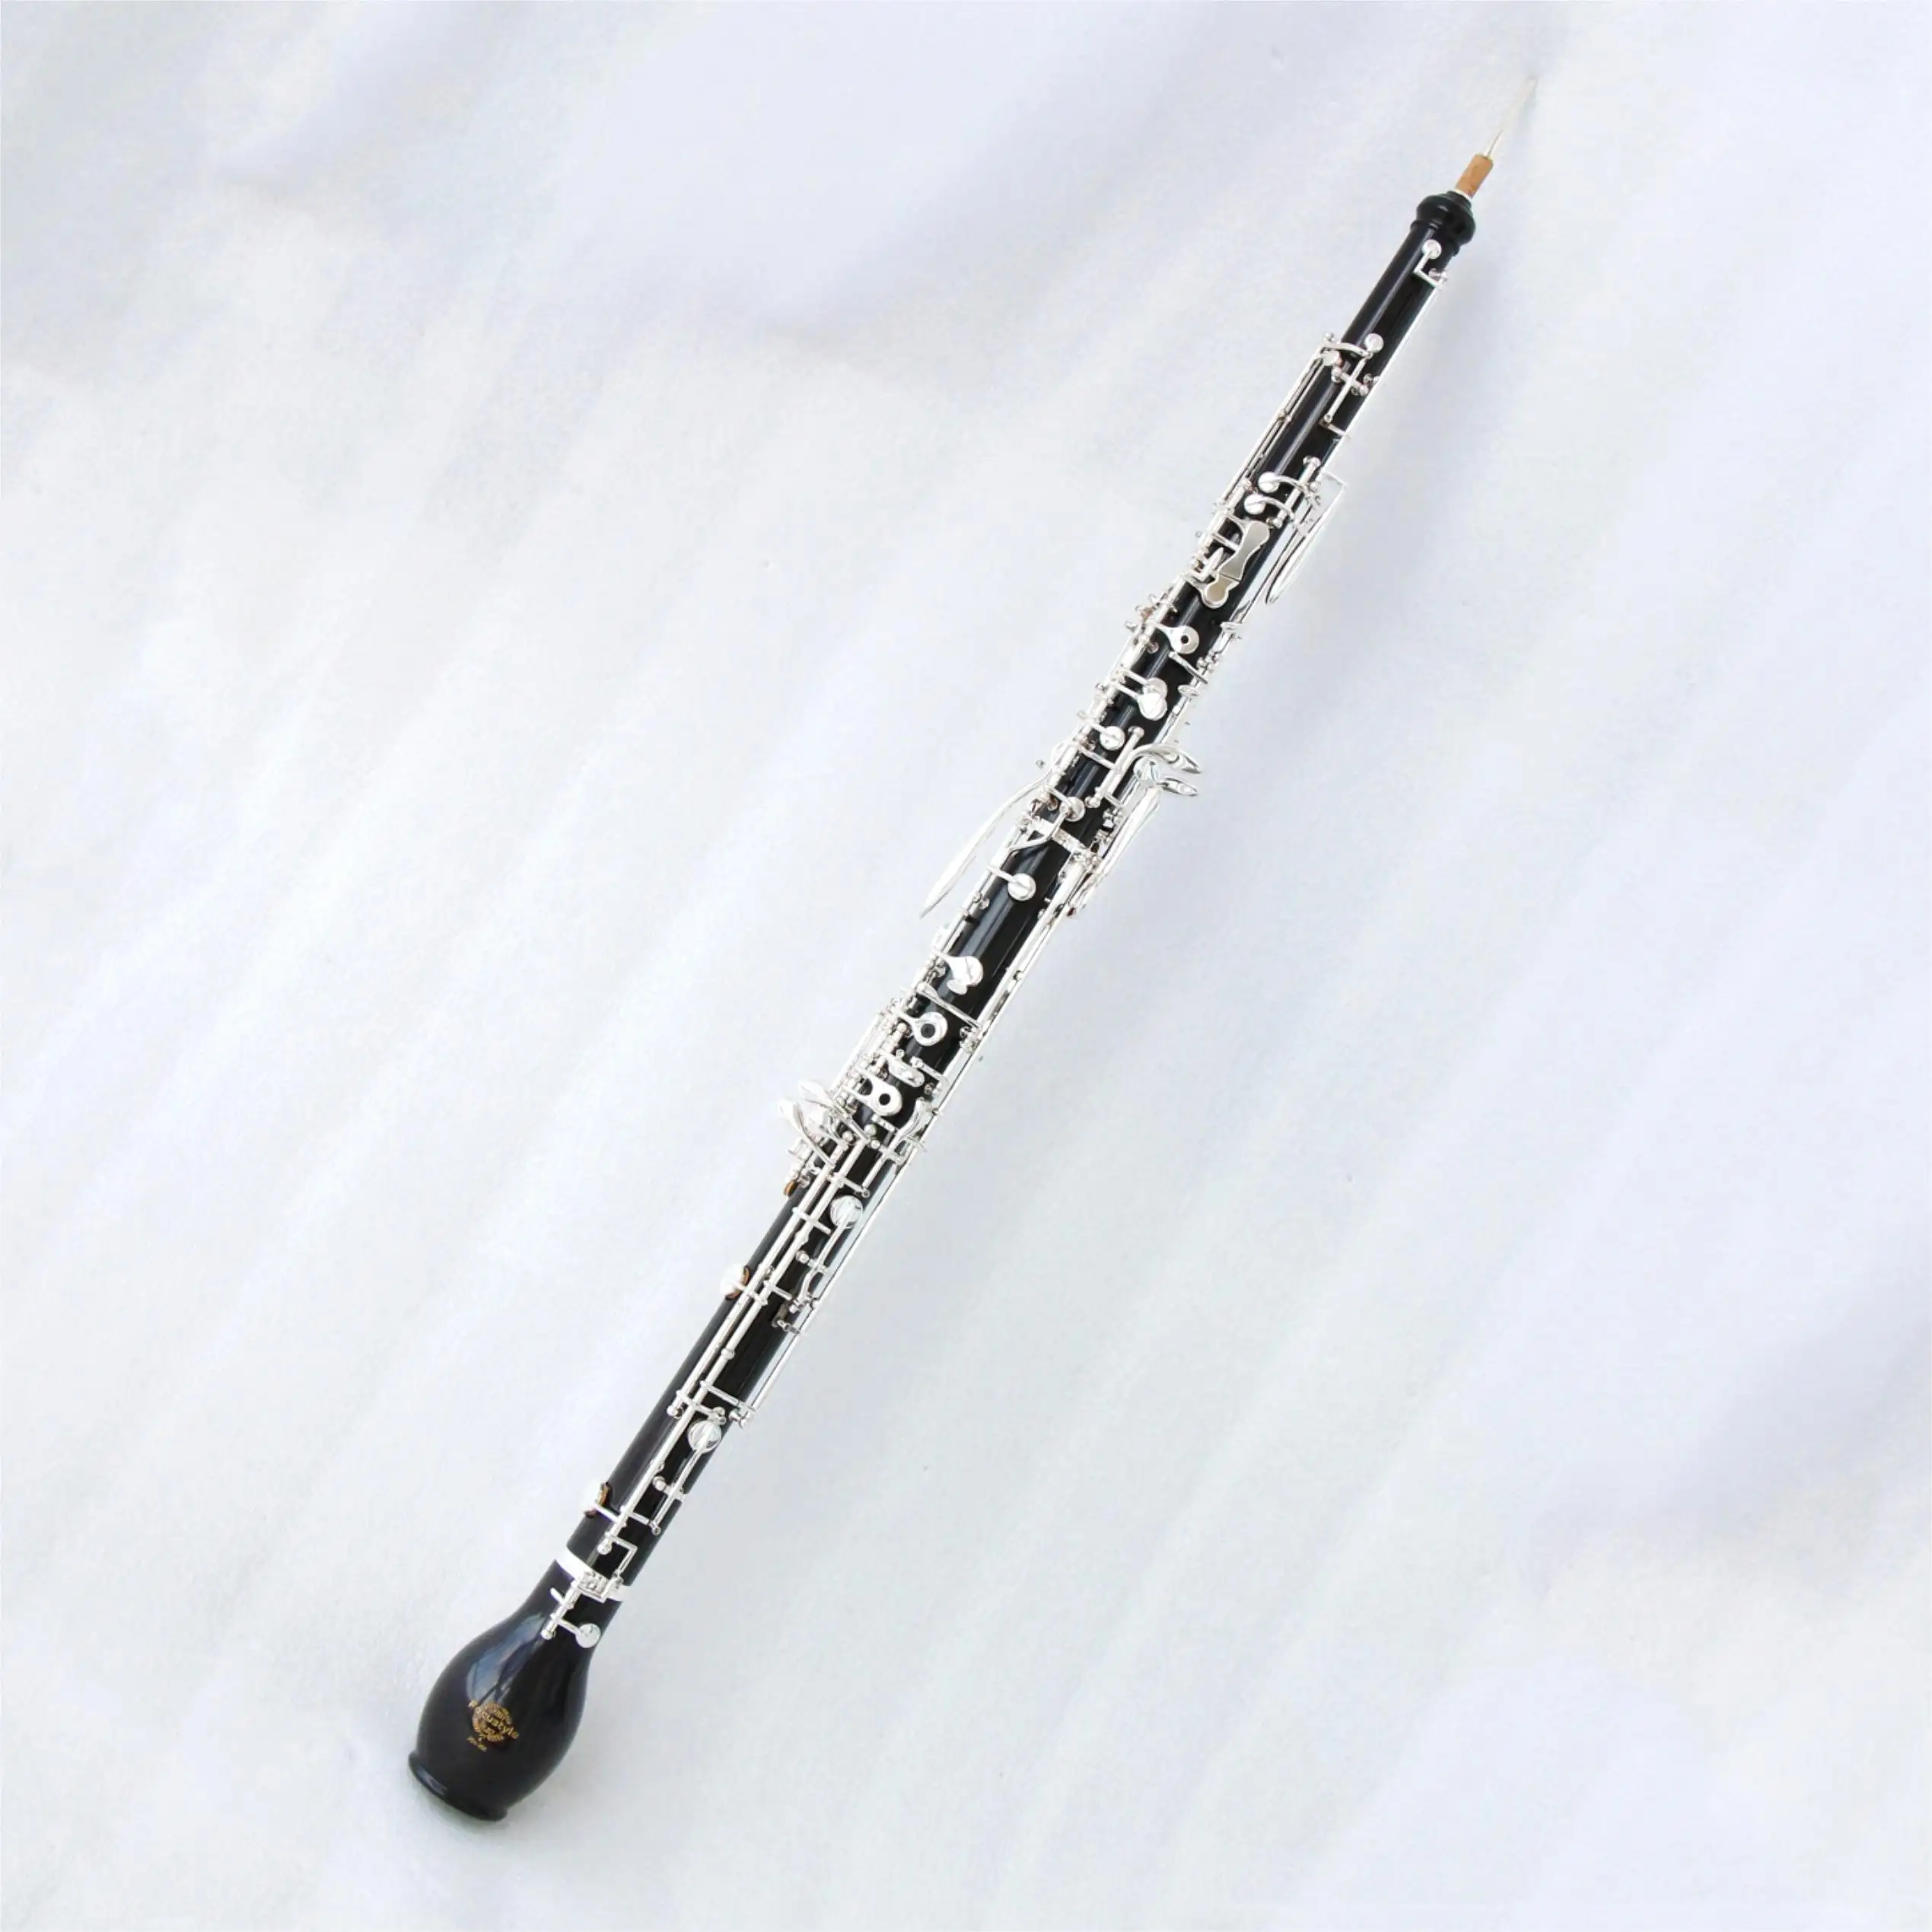 Chinesisches hochwertiges Ebony Wood English Horn Musik instrument versilbert